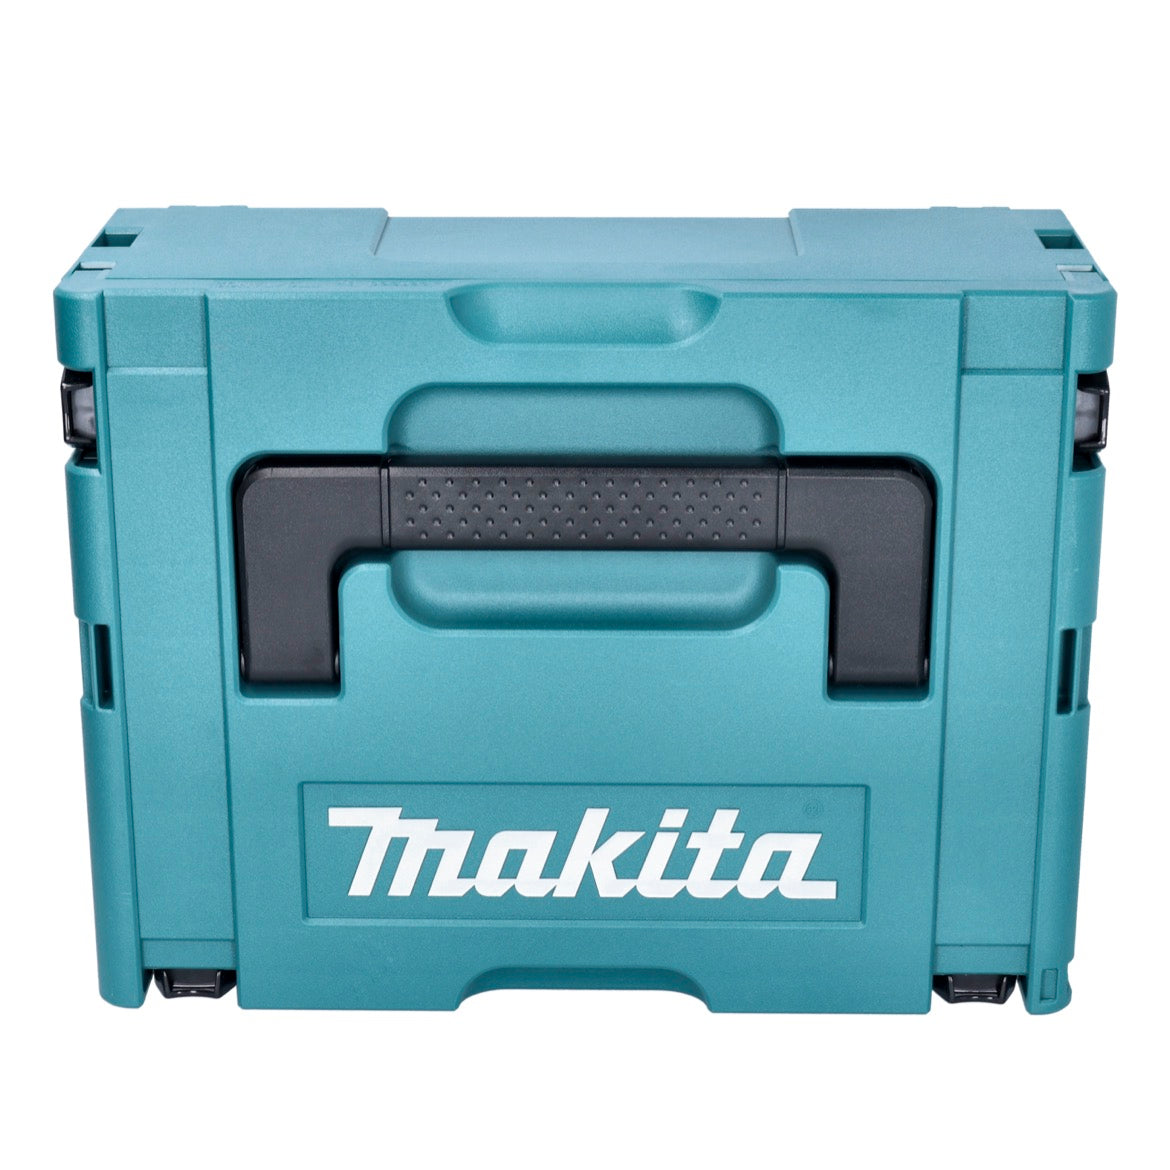 Makita DDF 485 SY1J Akku Bohrschrauber 18 V 50 Nm Brushless + 1x Akku 1,5 Ah + Ladegerät + Makpac - Toolbrothers